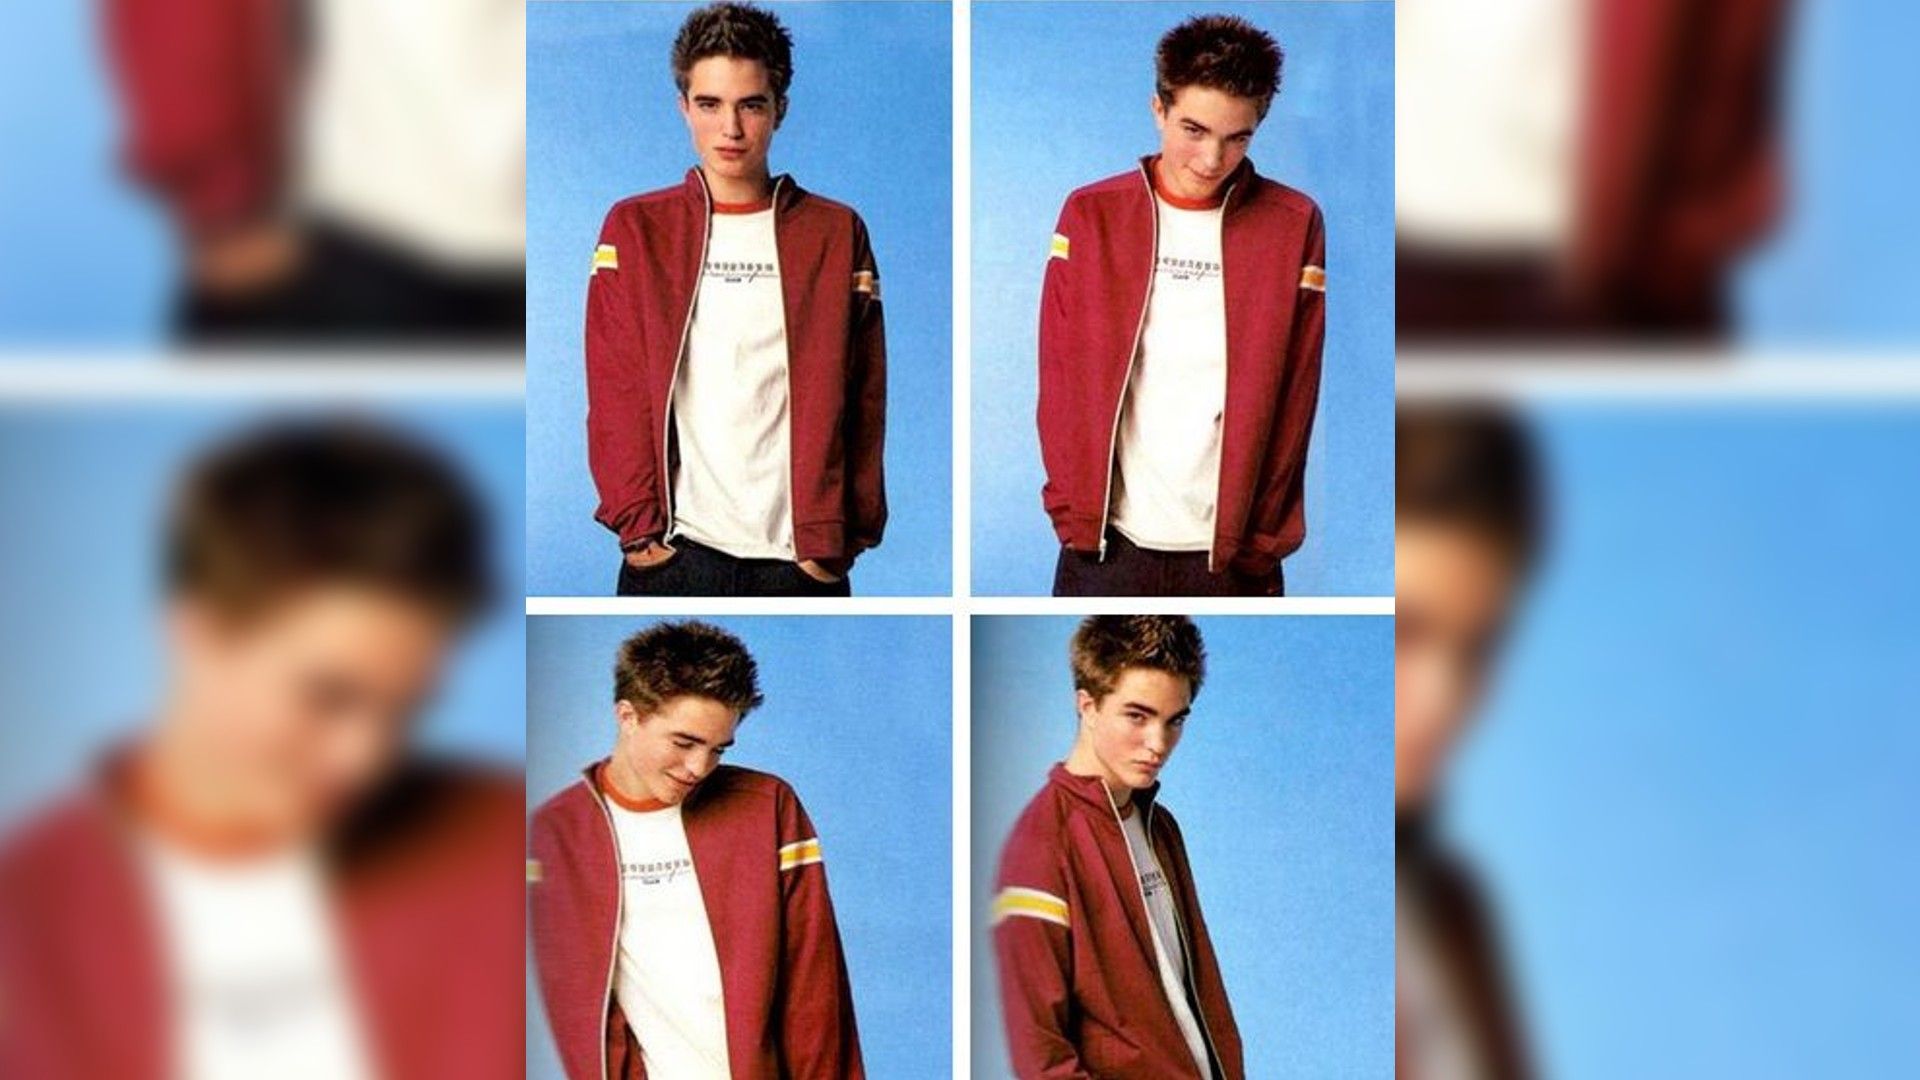 The young Robert Pattinson